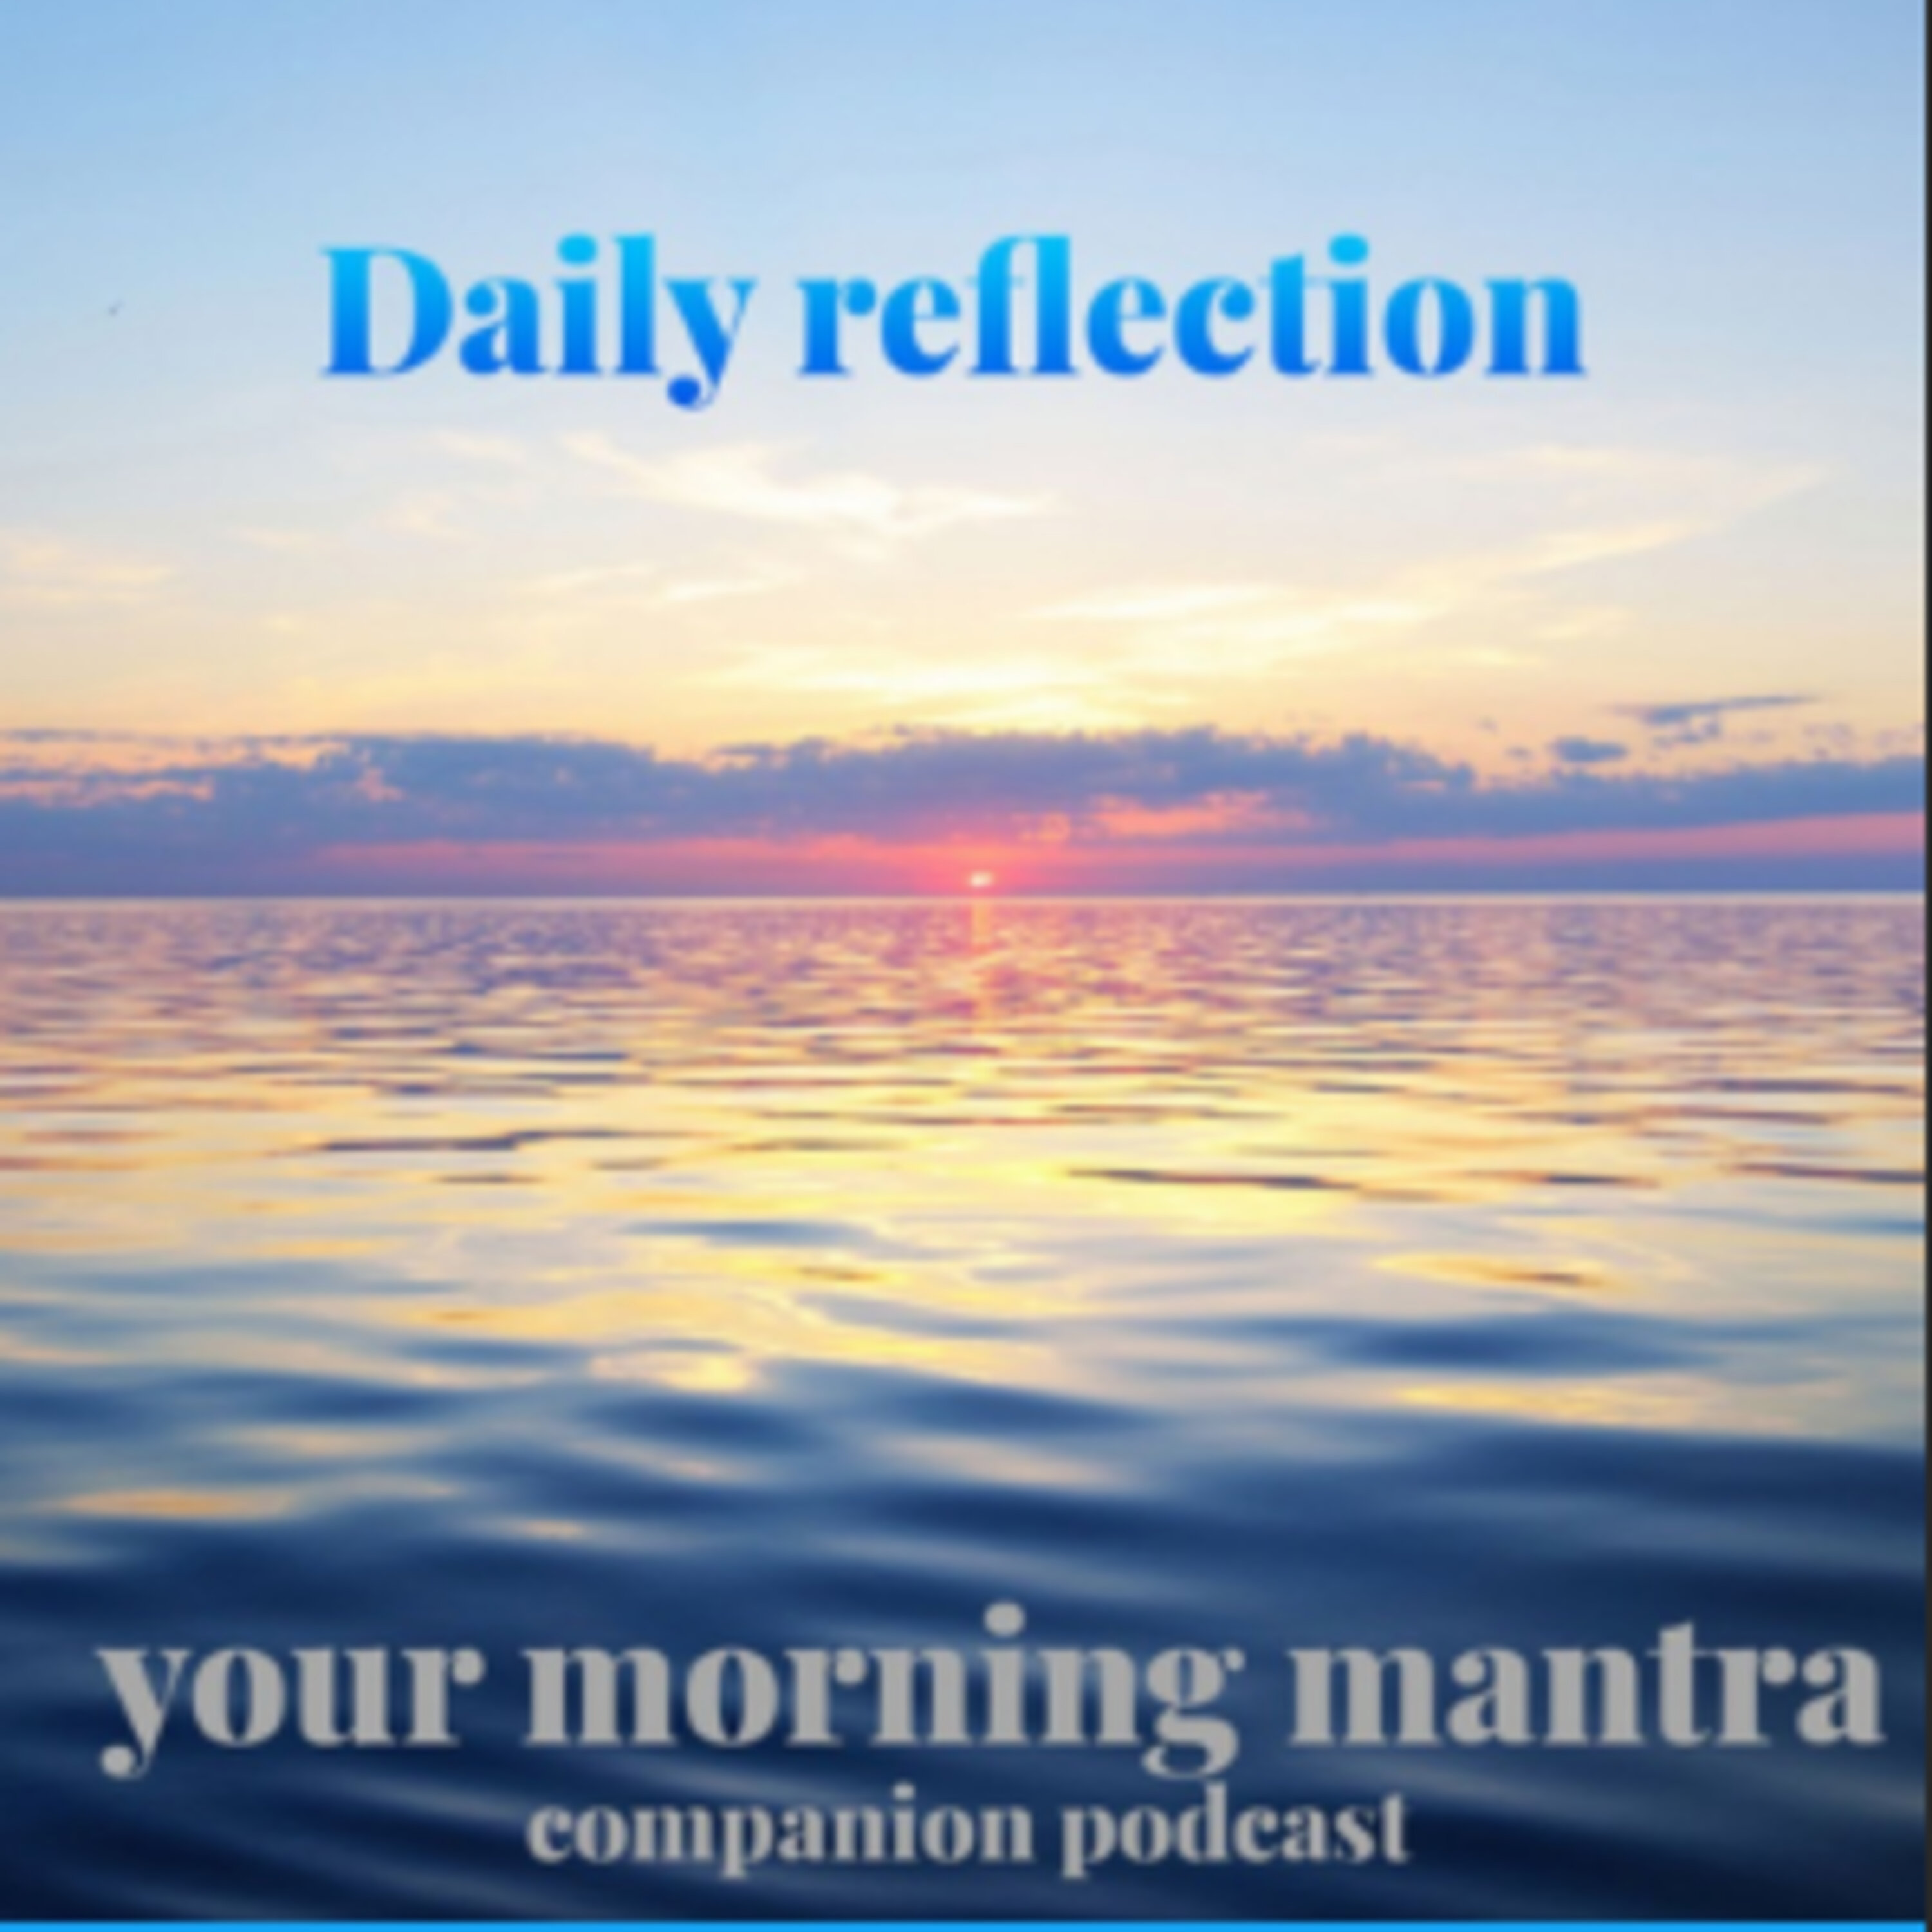 Reflection - I do my best